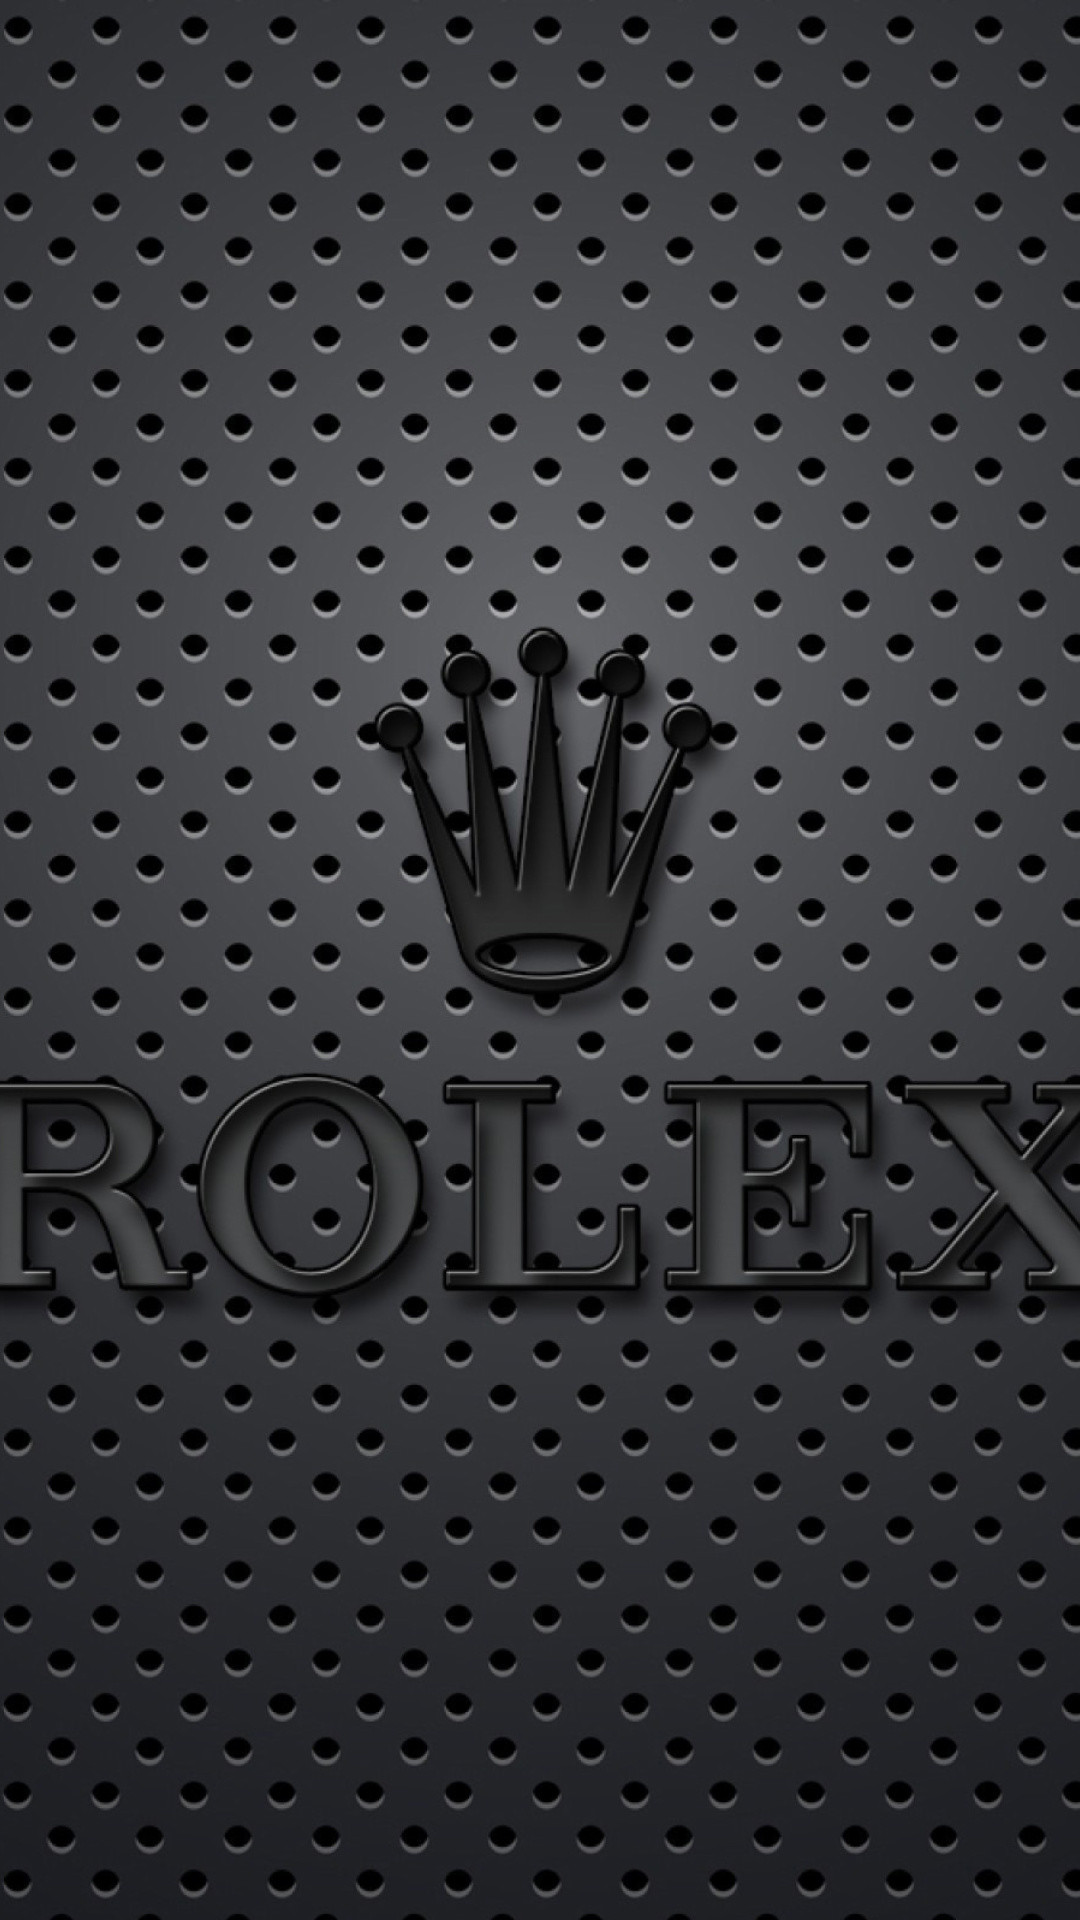 Rolex Iphone Wallpapers